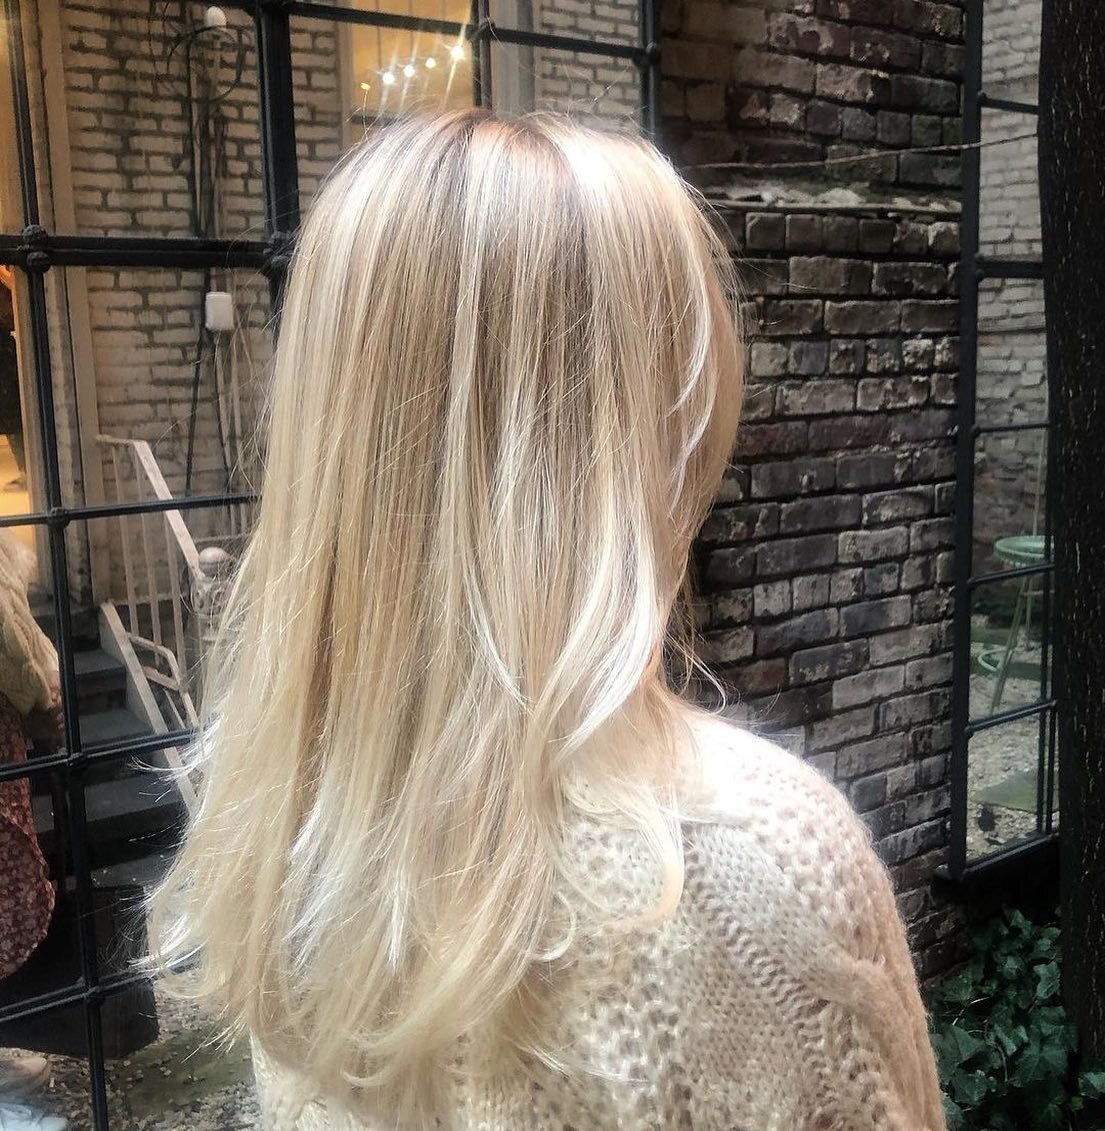 Baby blonde balayage by @mirandashafferhair for the win win 💕 and a haircut by Adel ✂️ 

#balayagenyc #handpainted #haircolornyc #highlightsnyc #style #beautynyc #beautybloggernyc #nyccolorist #nyc #newyorksalon #adelatelier #luxurysalon #boutiquesa